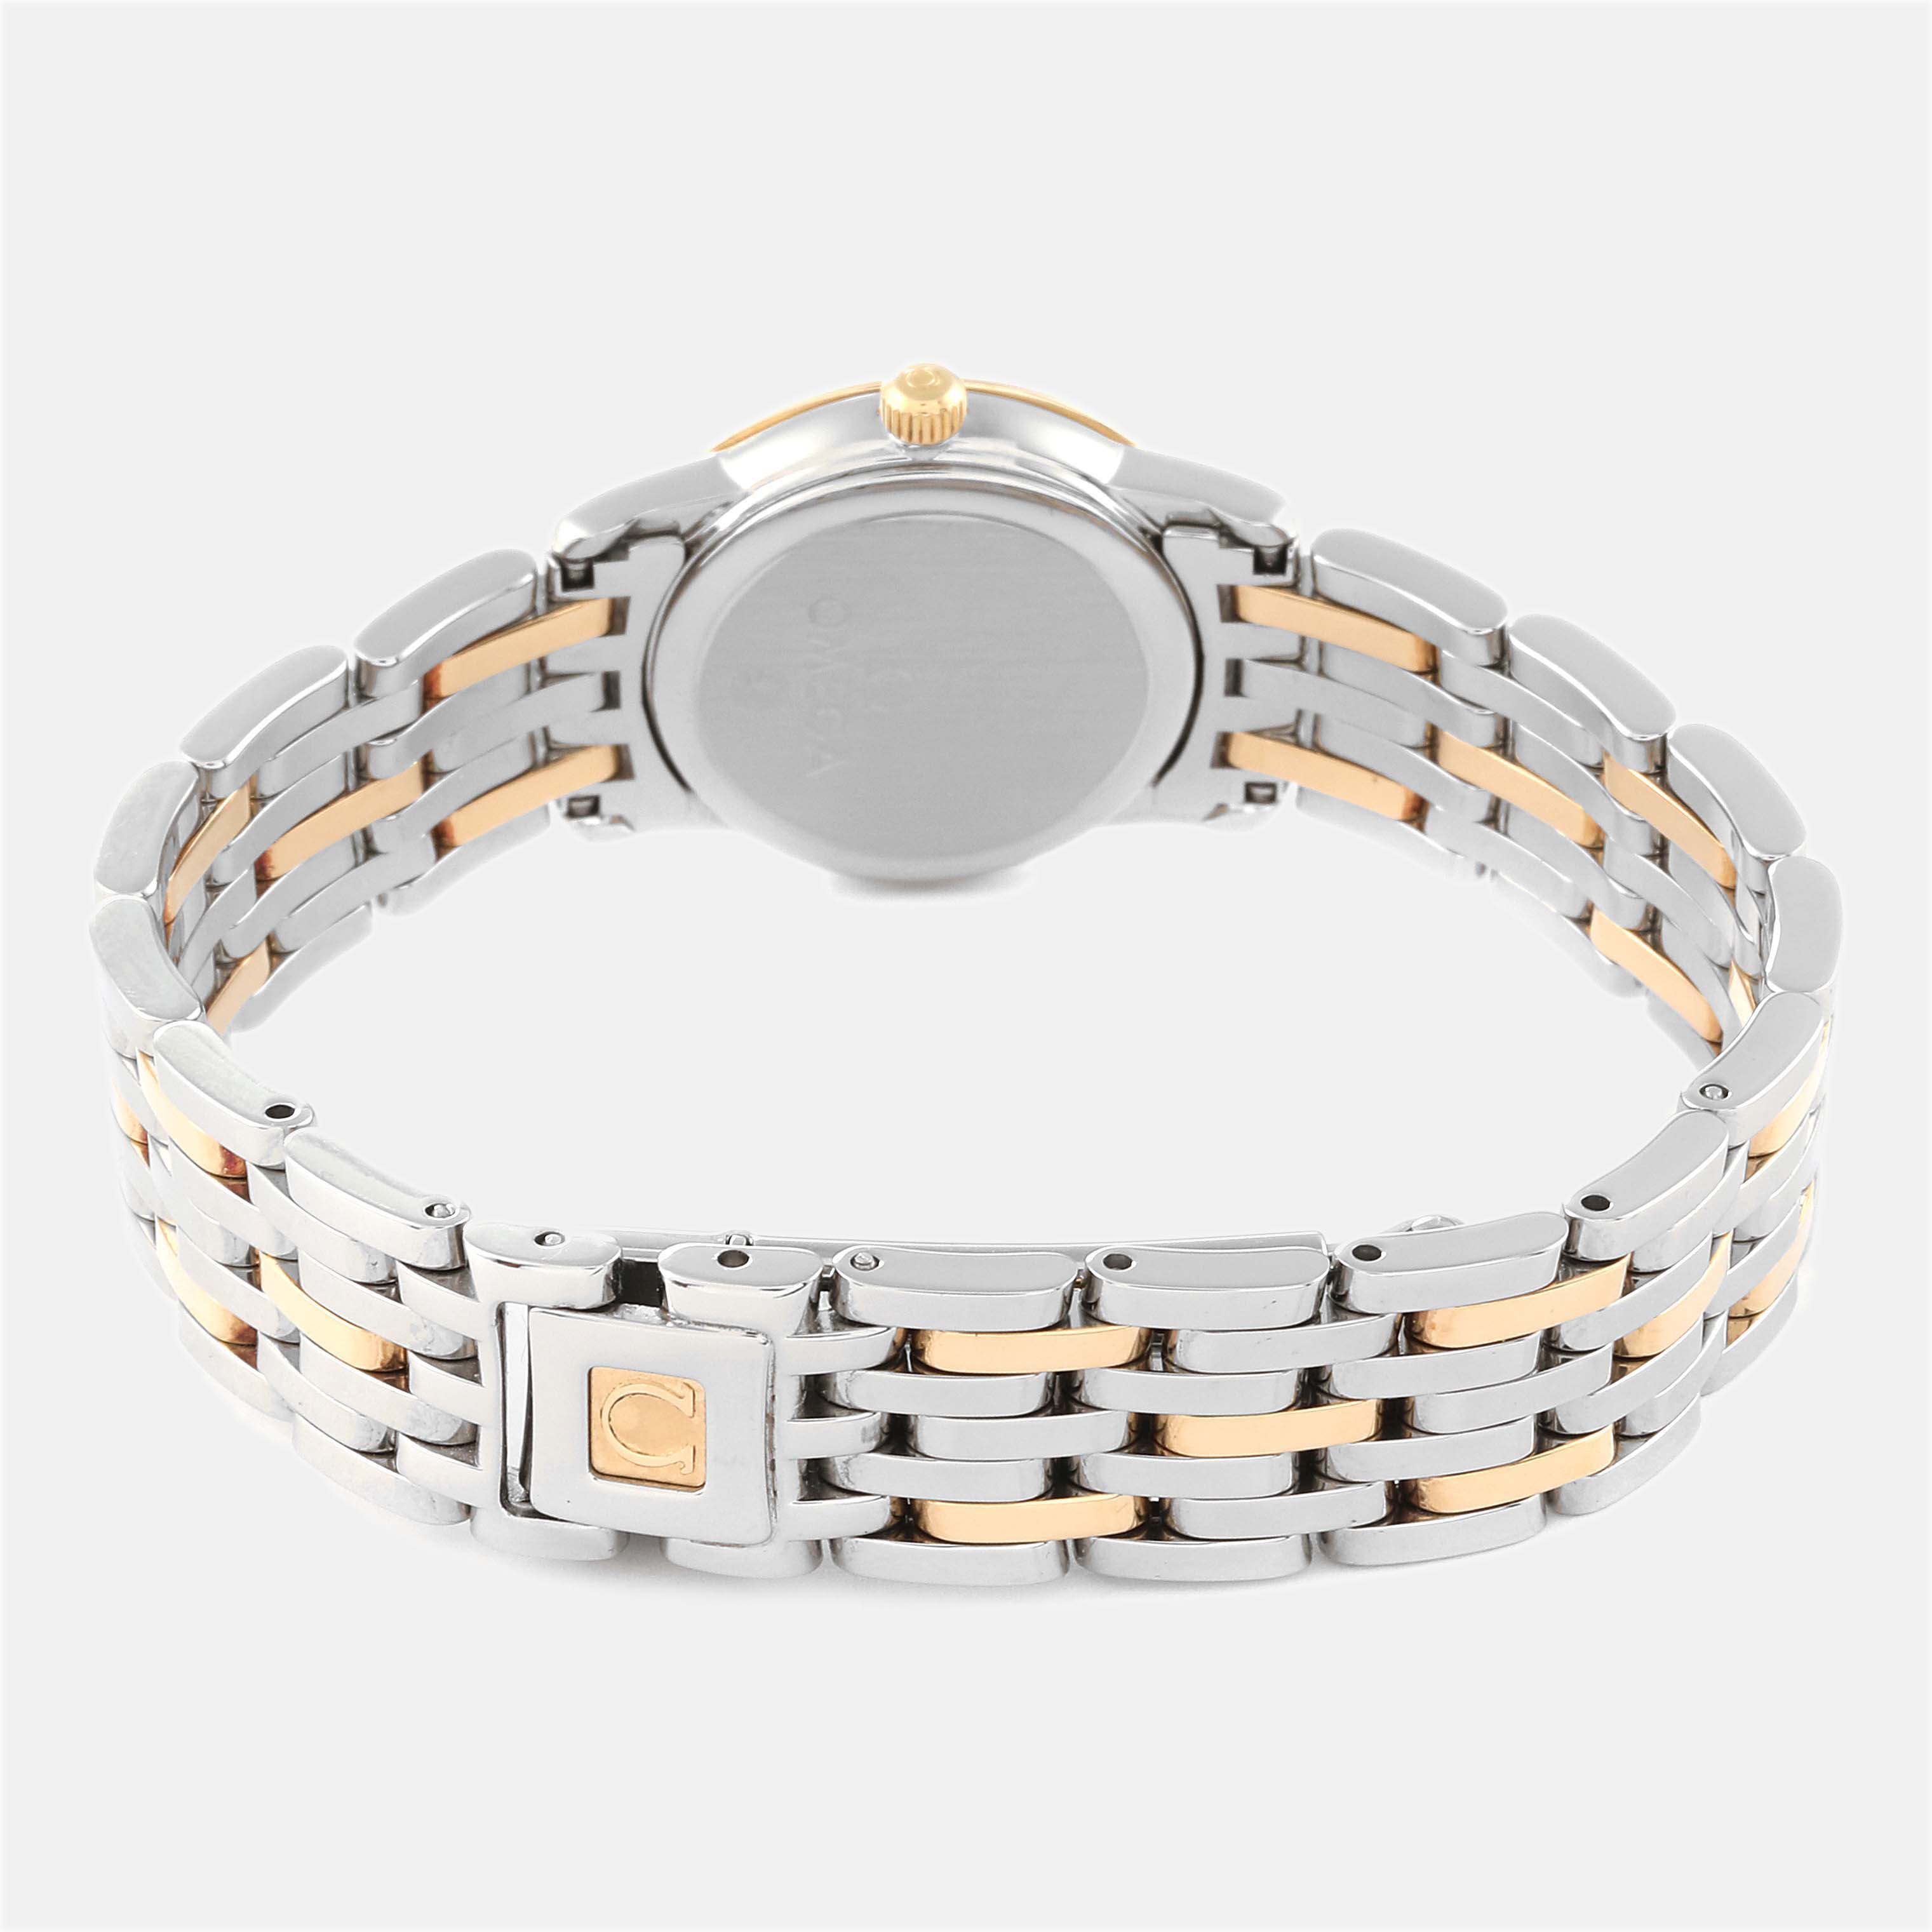 Omega Blue Diamond 18k Rose Gold And Stainless Steel Constellation 123.25.24.60.53.001 Quartz Women's Wristwatch 24 Mm